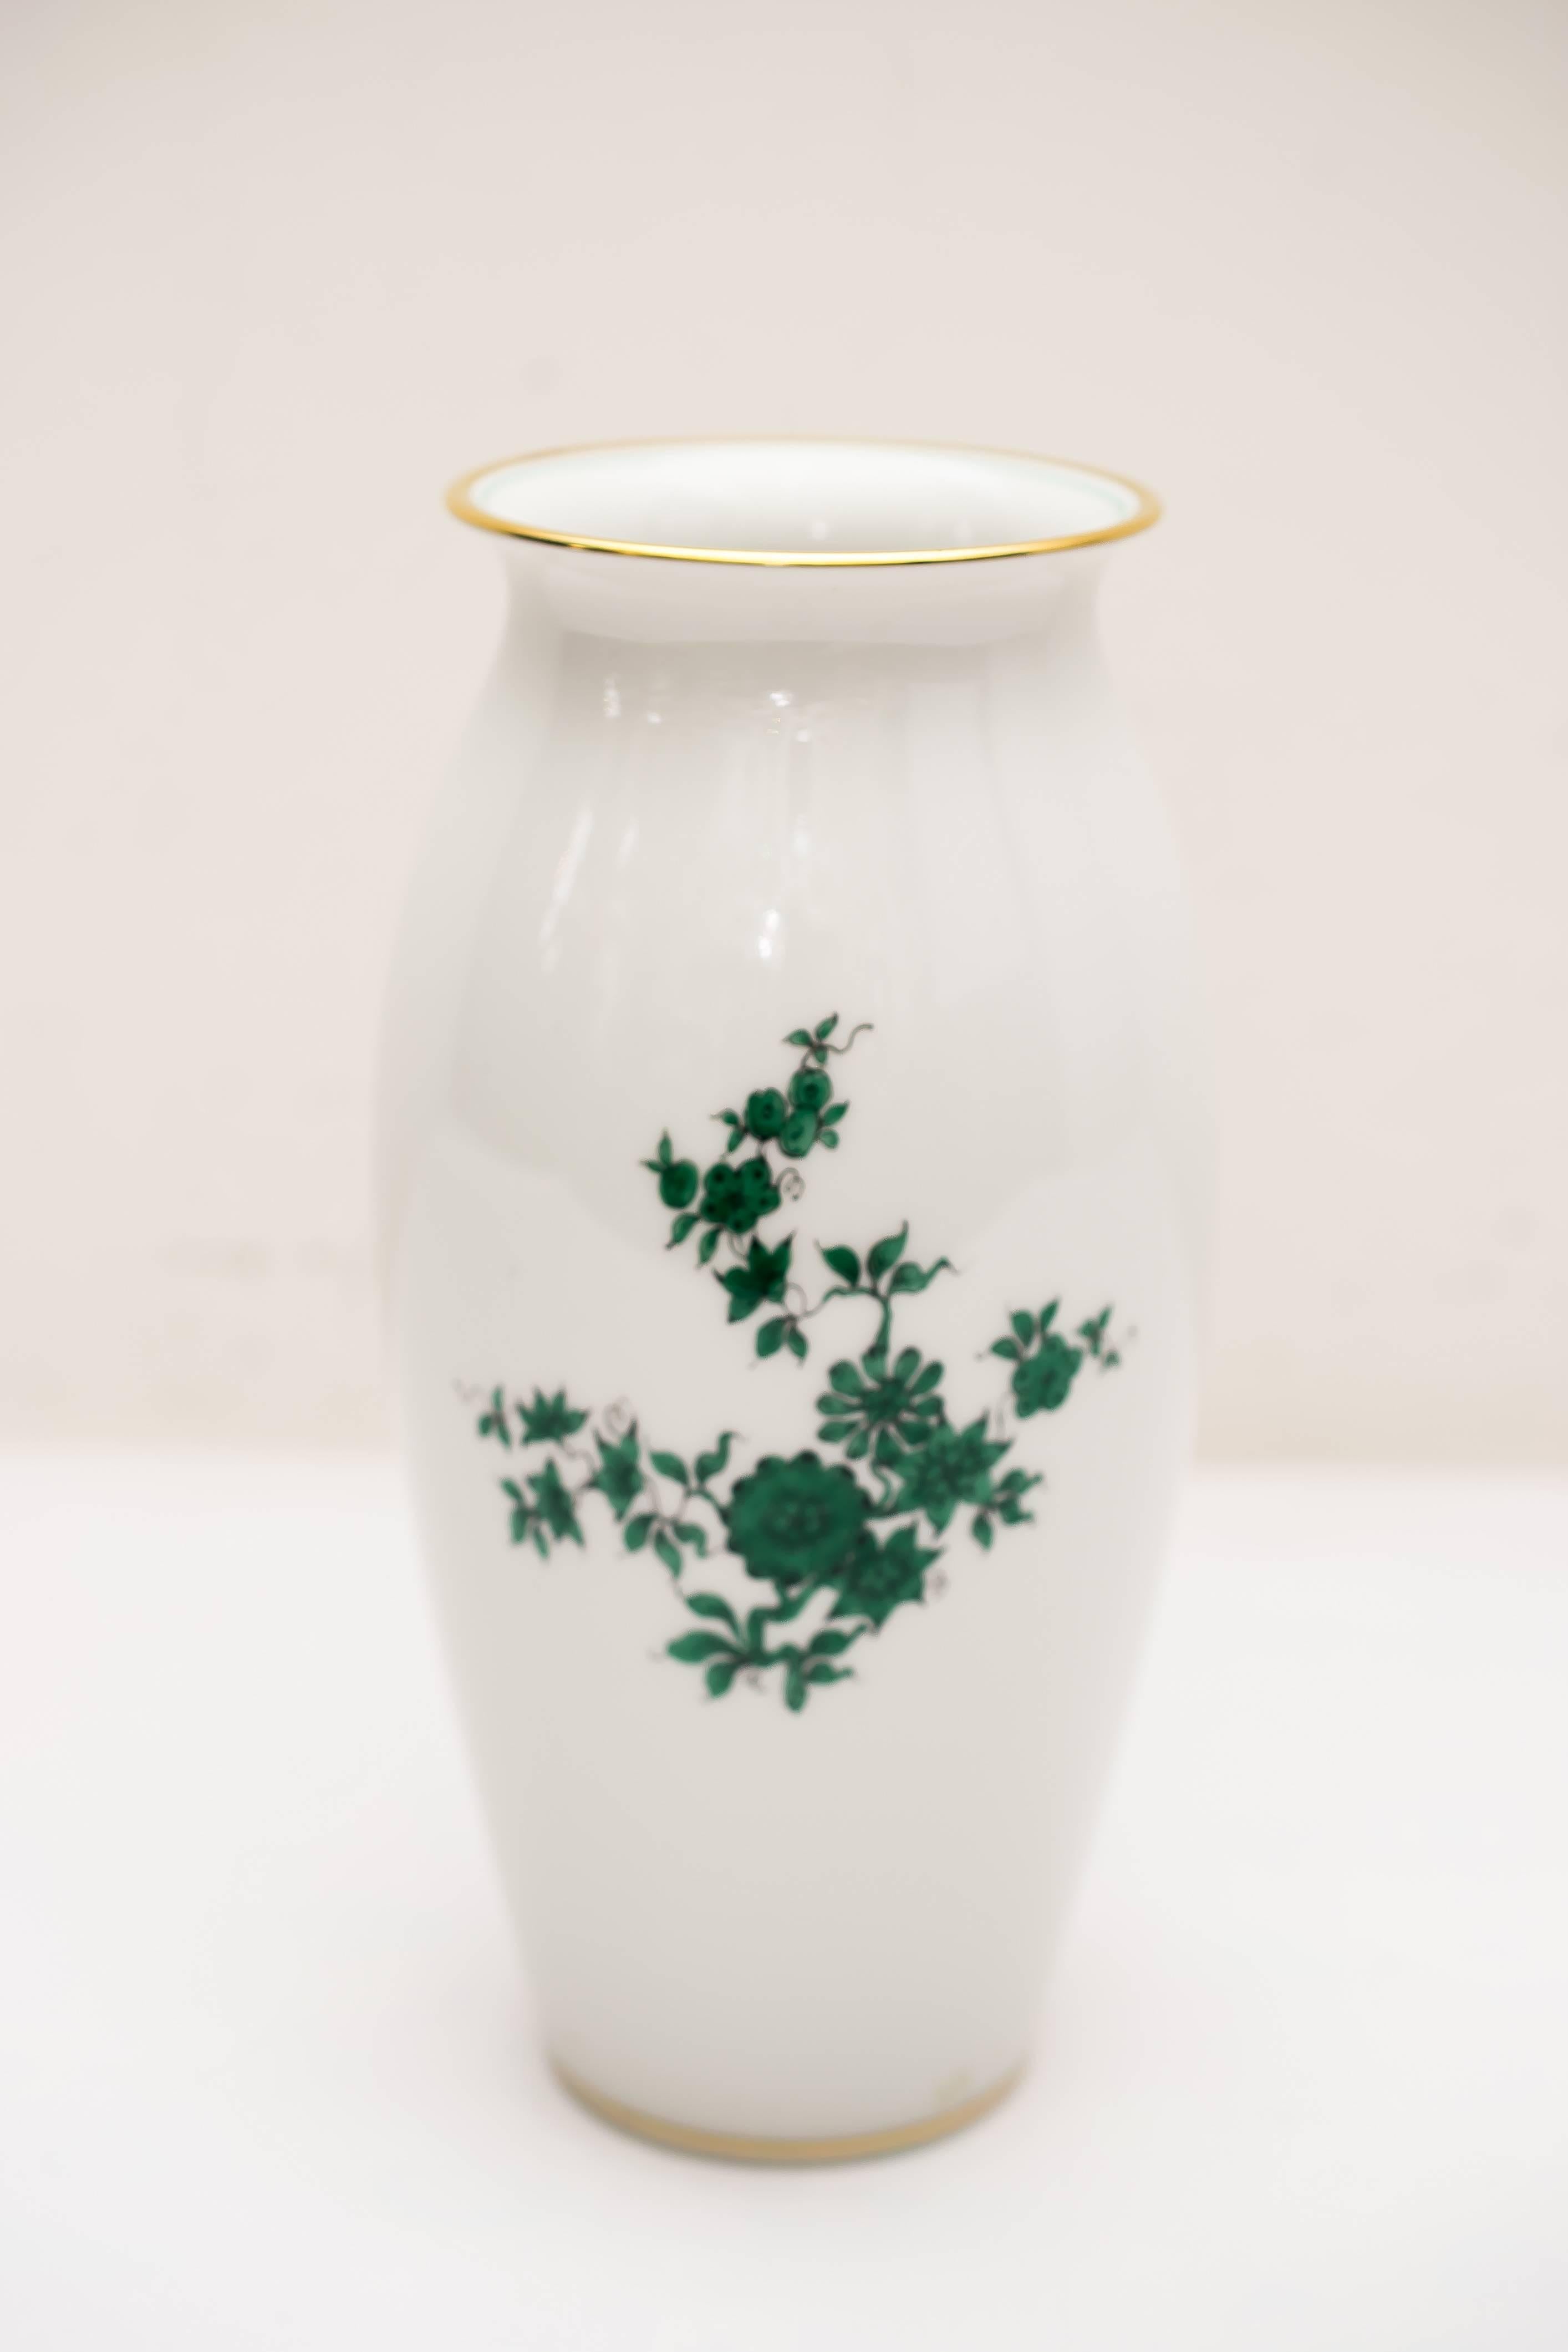 Augarten Maria Theresia green rose porcelain vase, 1960s
Excellent original condition.